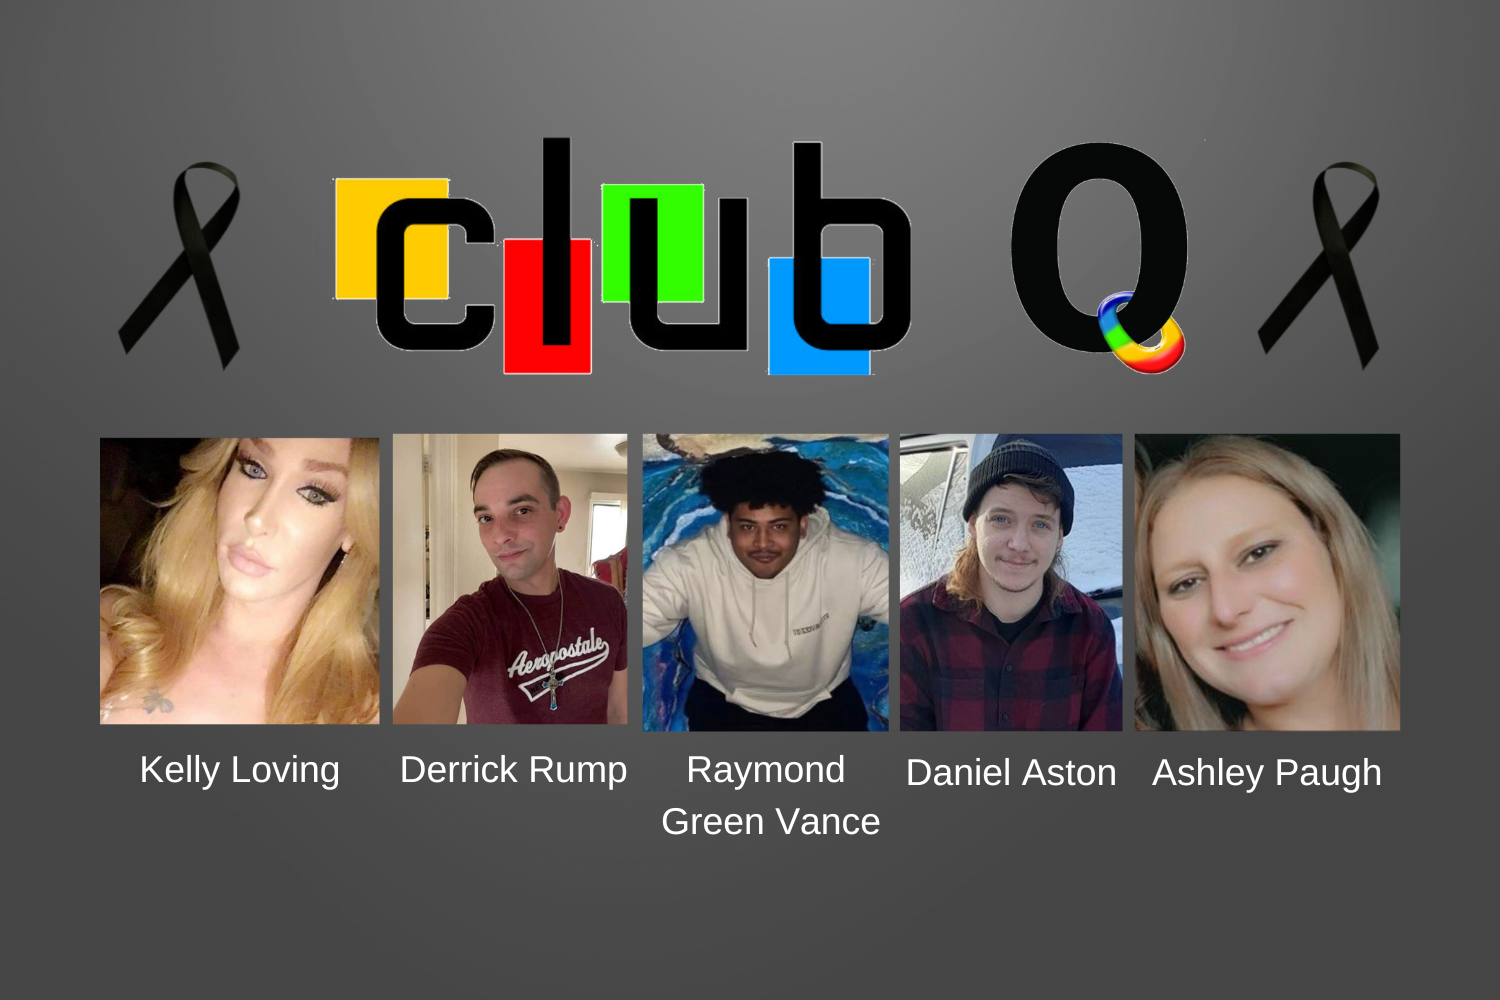 Club Q victims Kelly Loving, Derrick Rump, Raymond Green Vance, Daniel Aston, Ashley Paugh